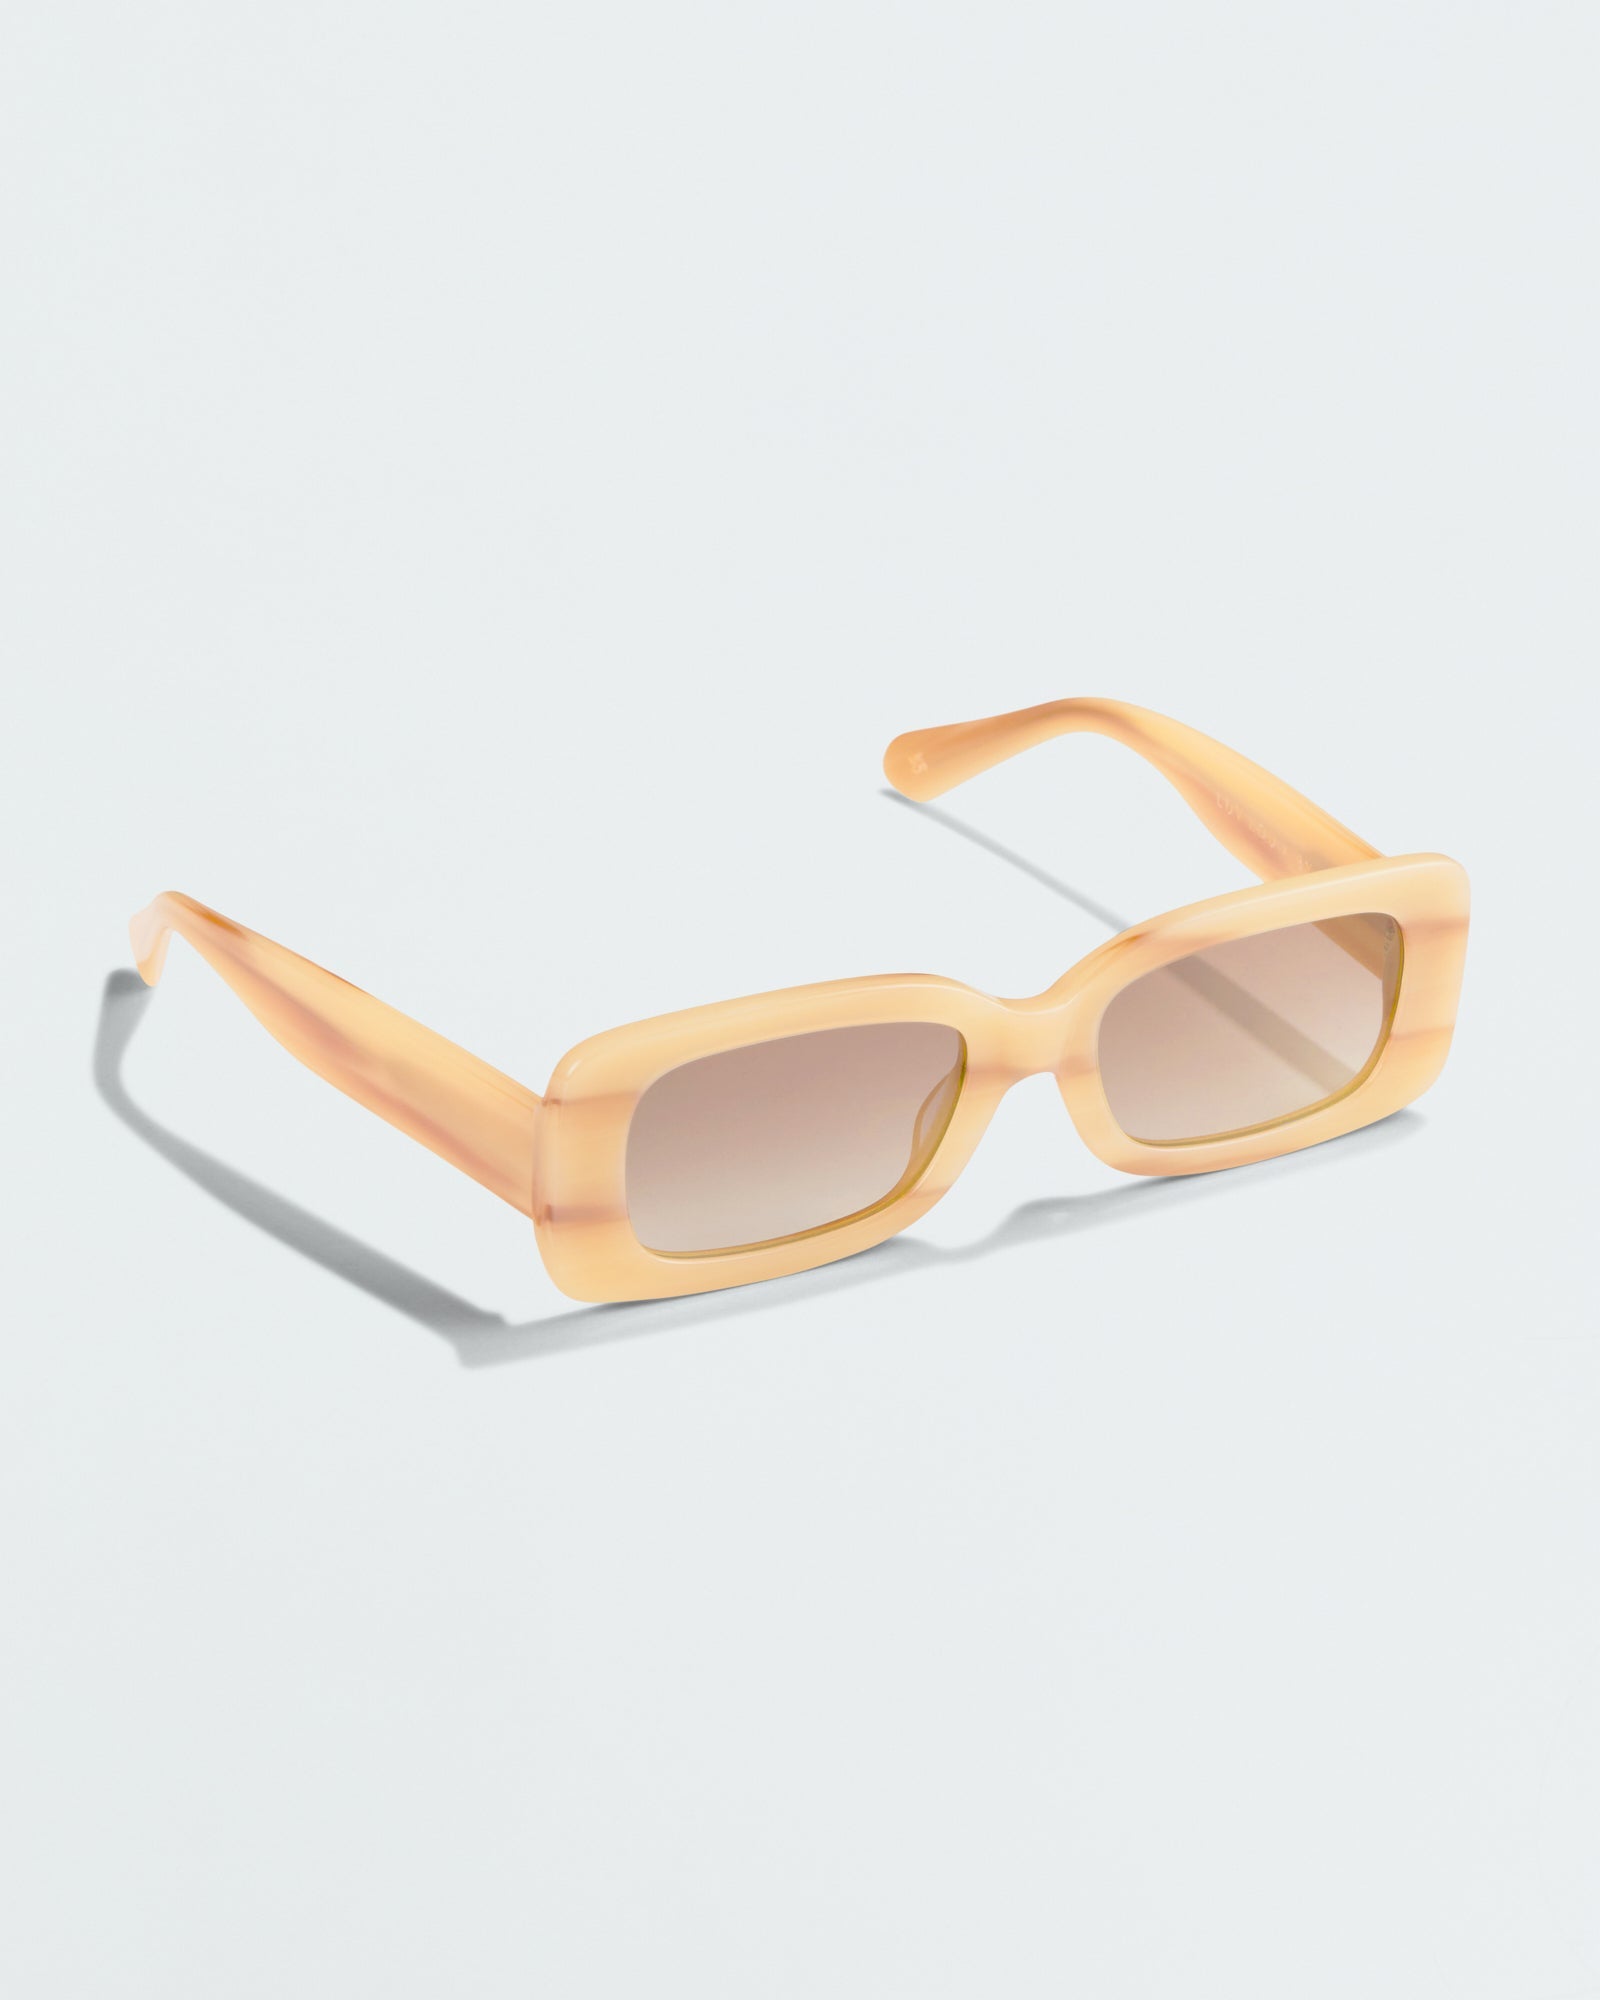 Women's Sunglasses Online USA | Premium Eyewear | Luv Lou